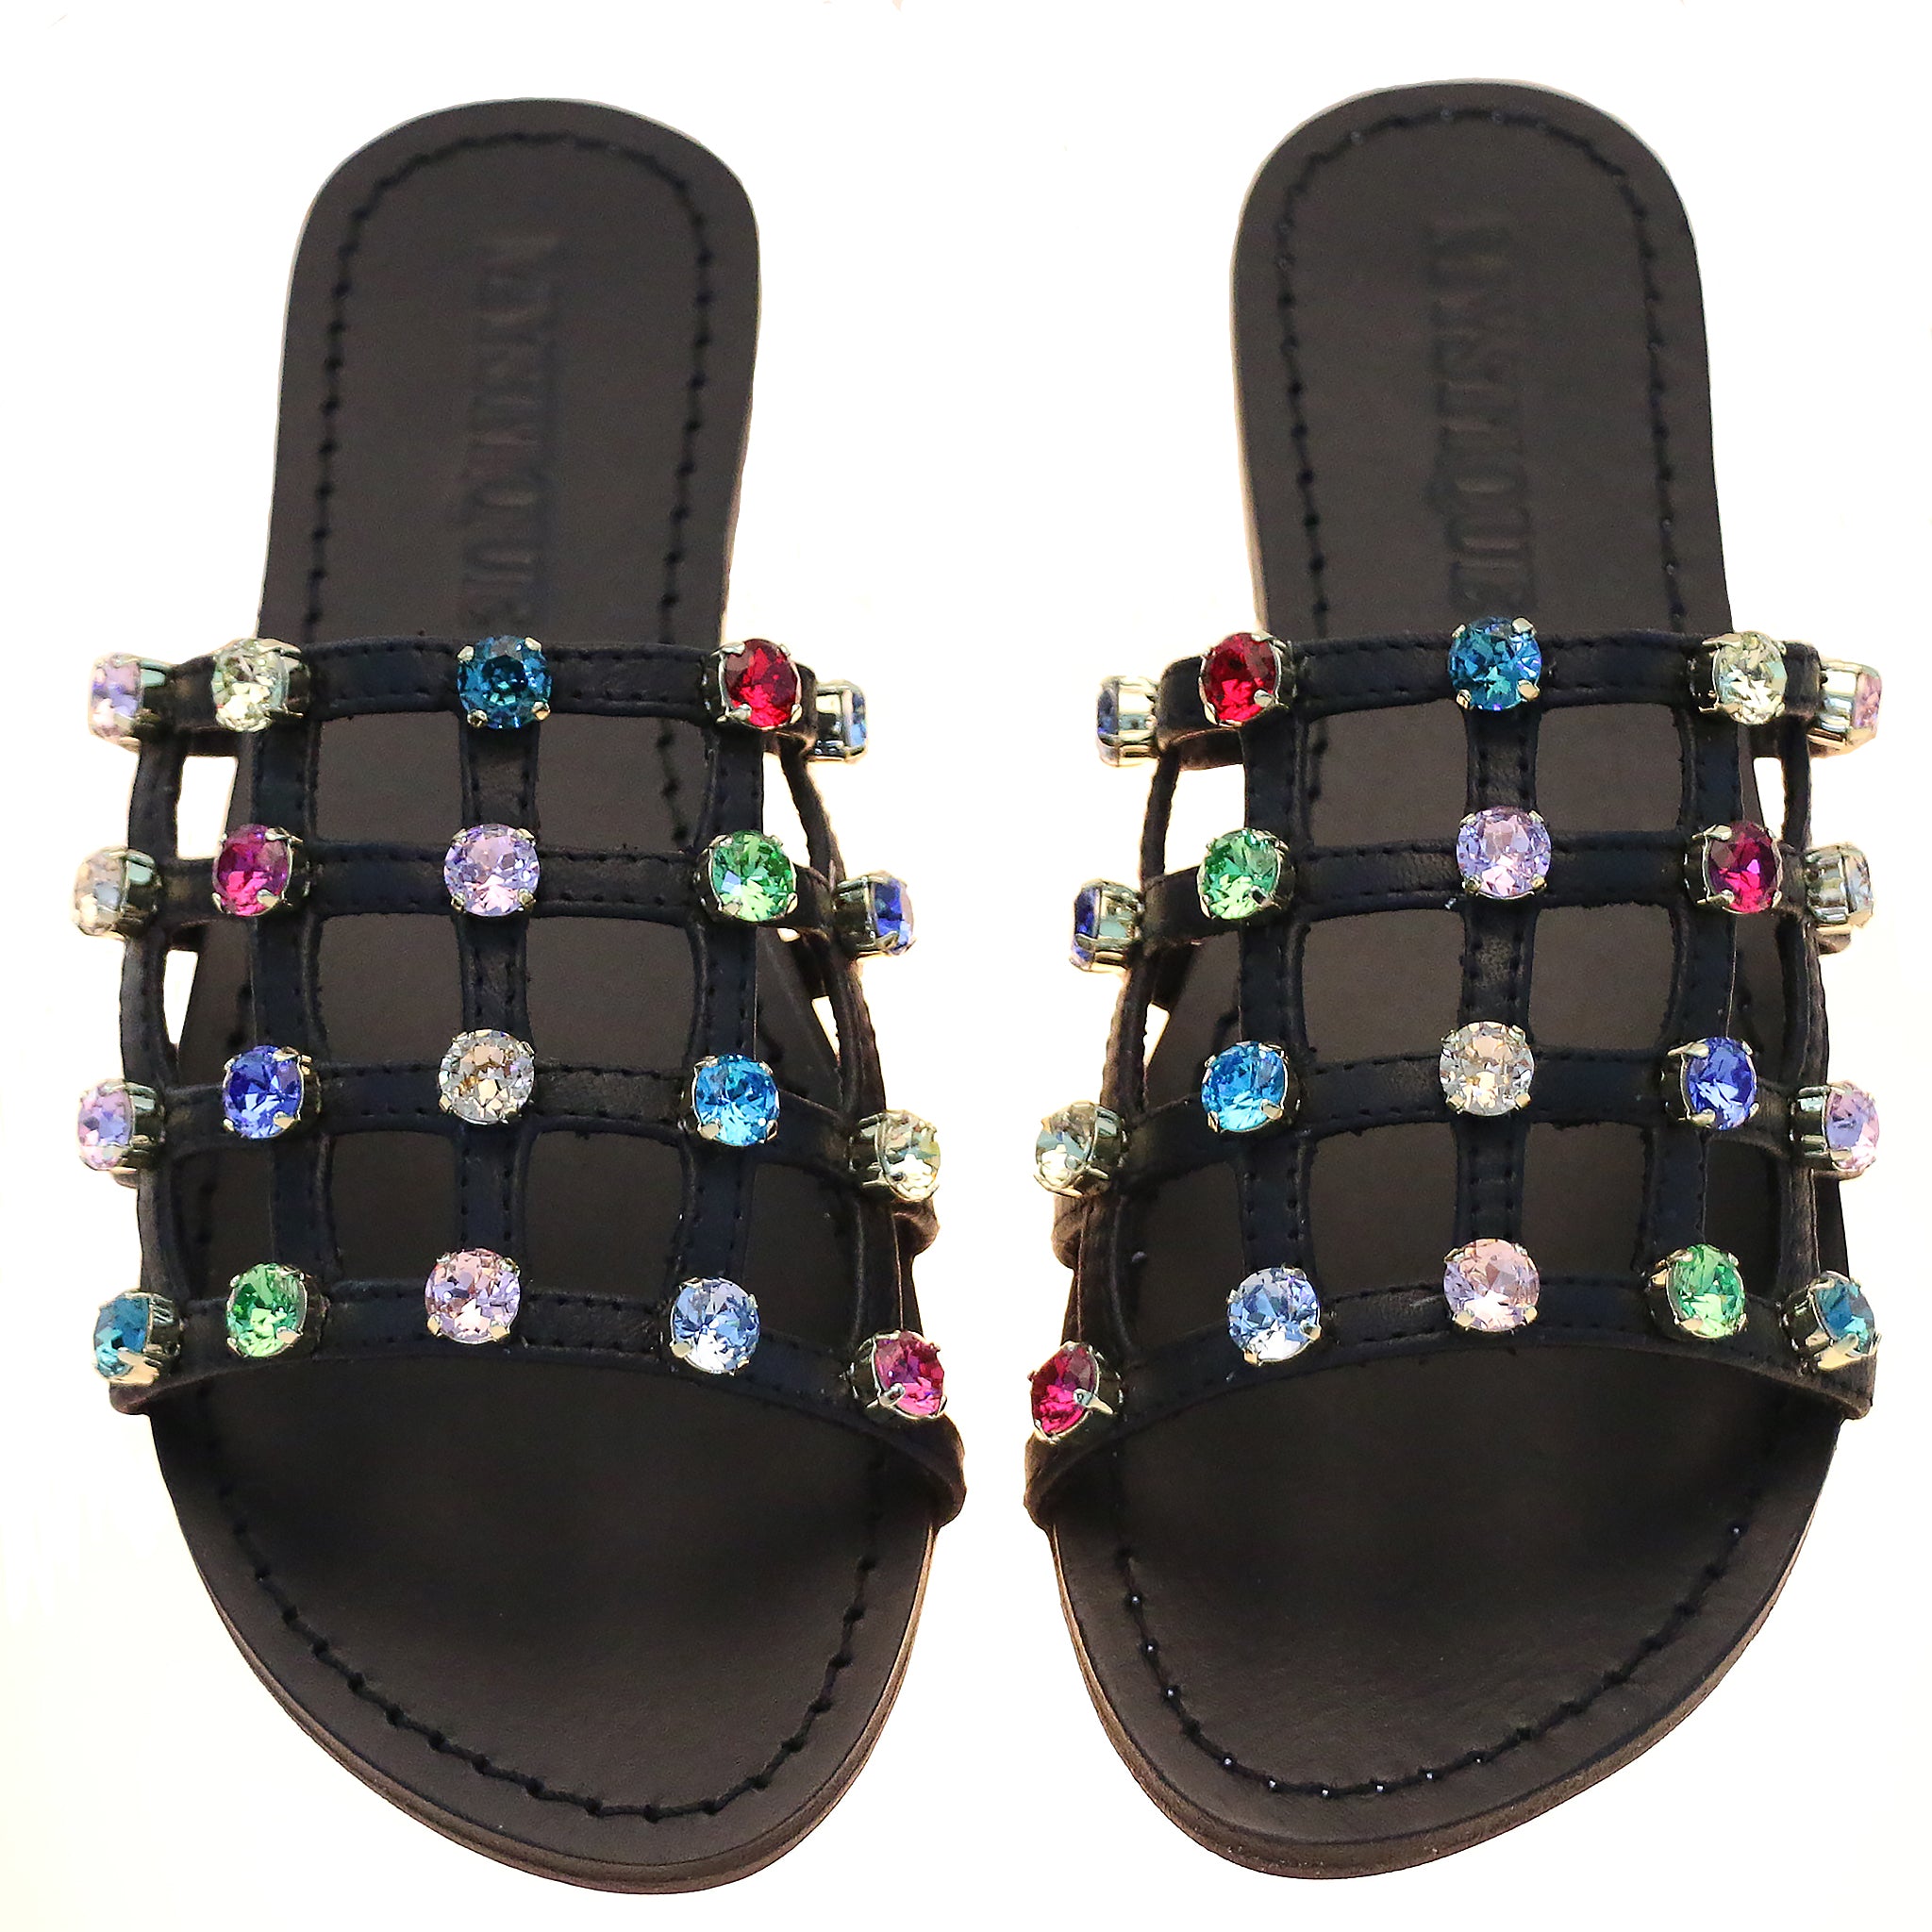 New Orleans - Women's Black Jeweled Cage Sandals | Mystique Sandals